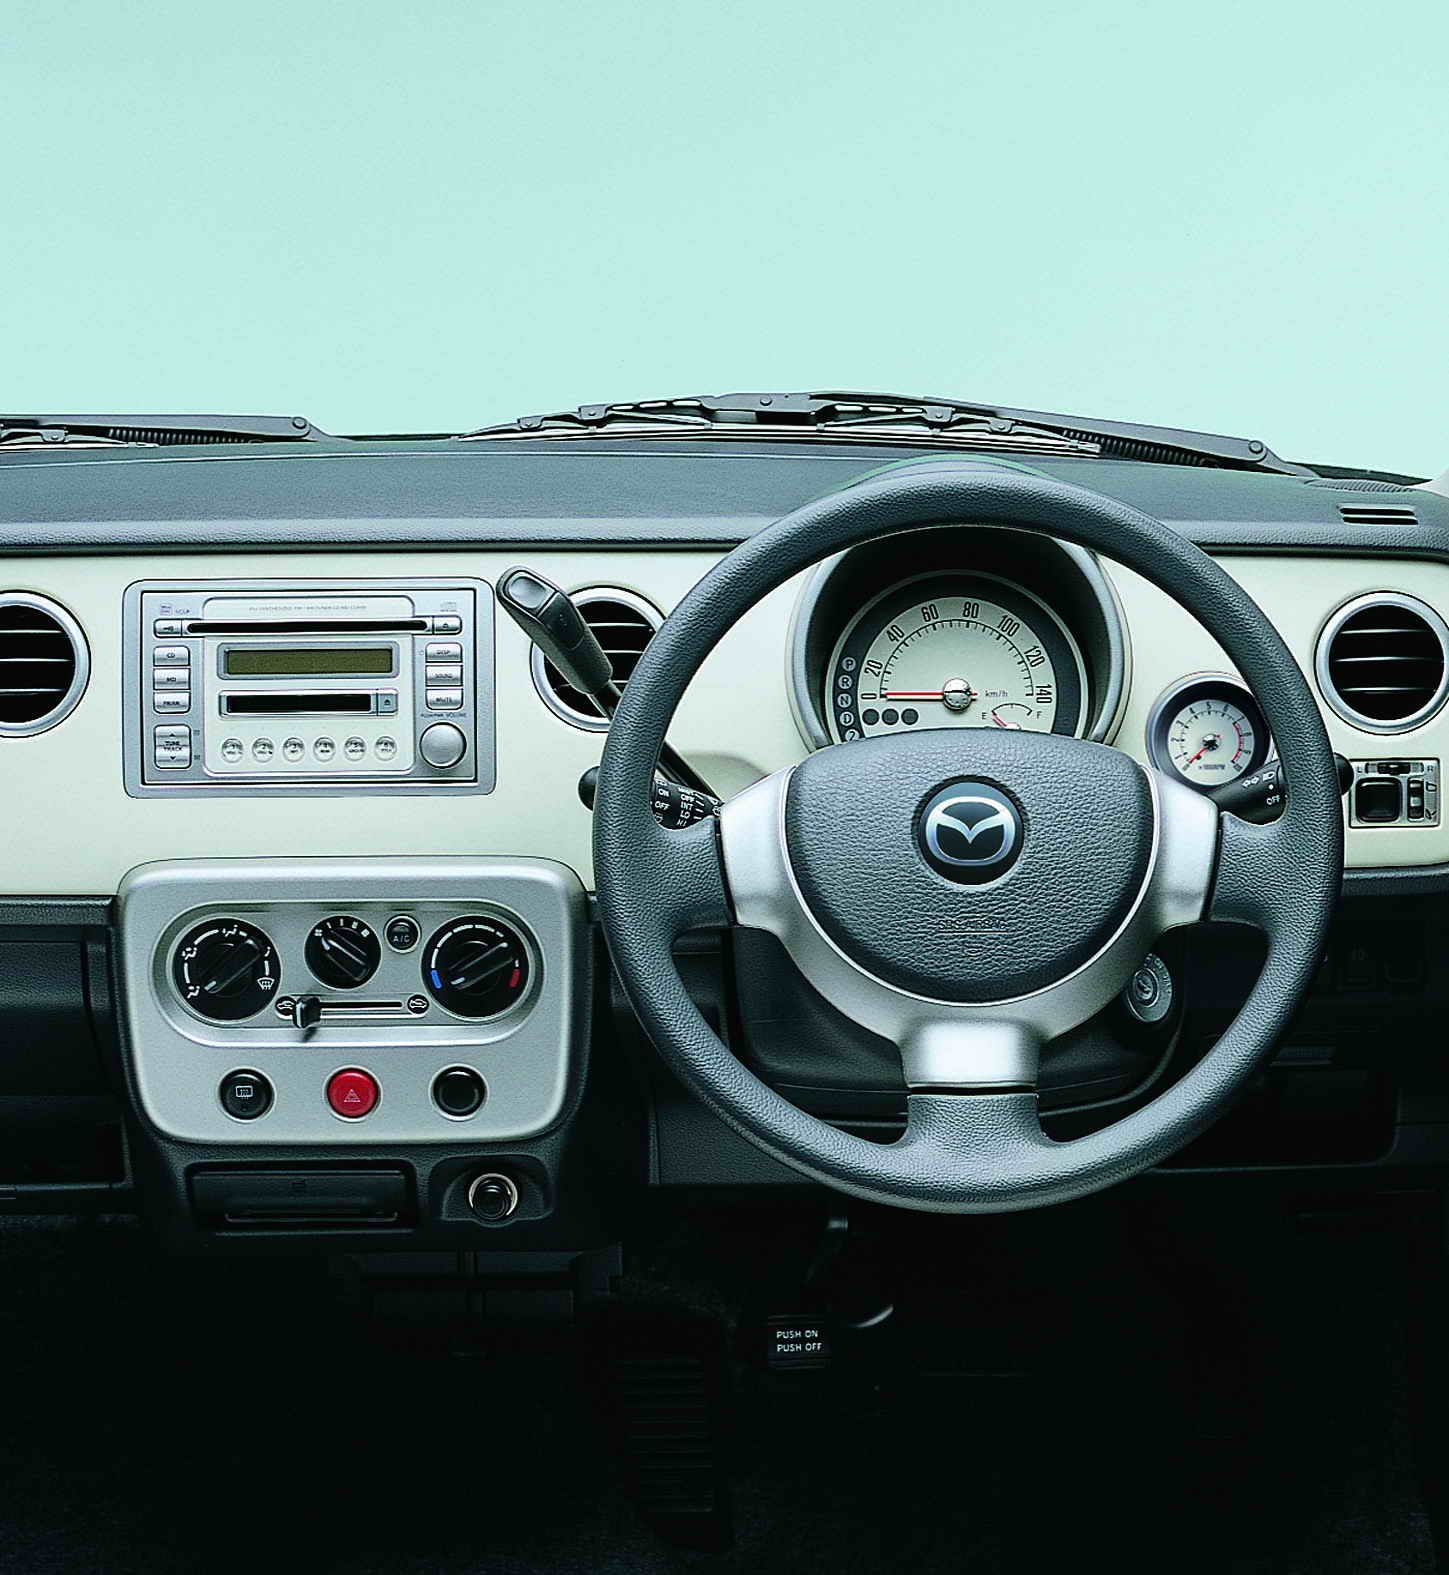 2006 Mazda Spiano